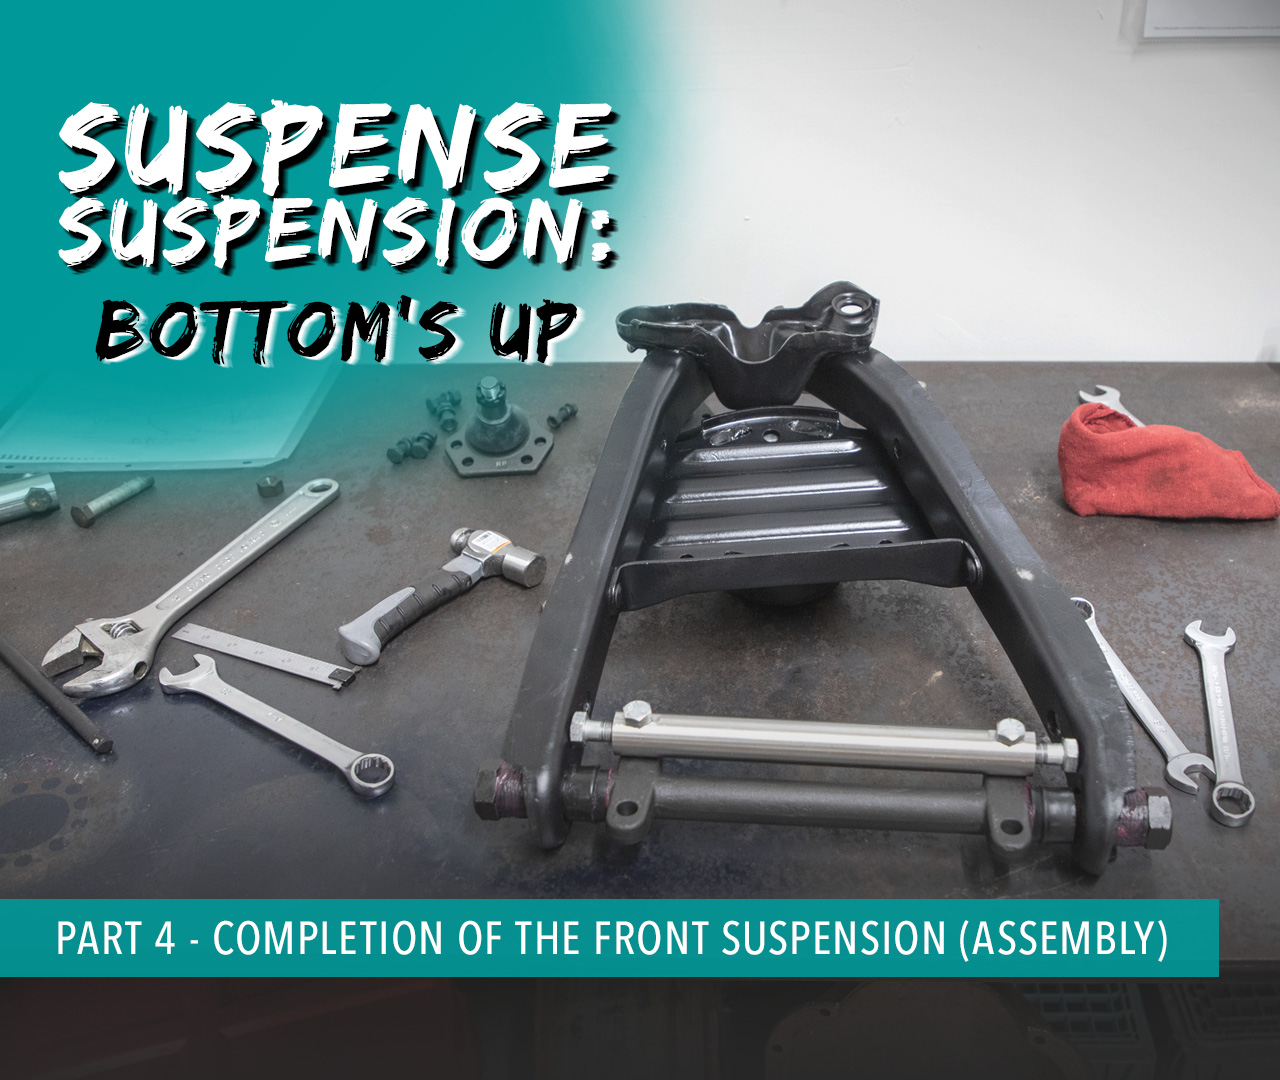 Suspense Suspension Part 4 - Completion of the Front Suspension